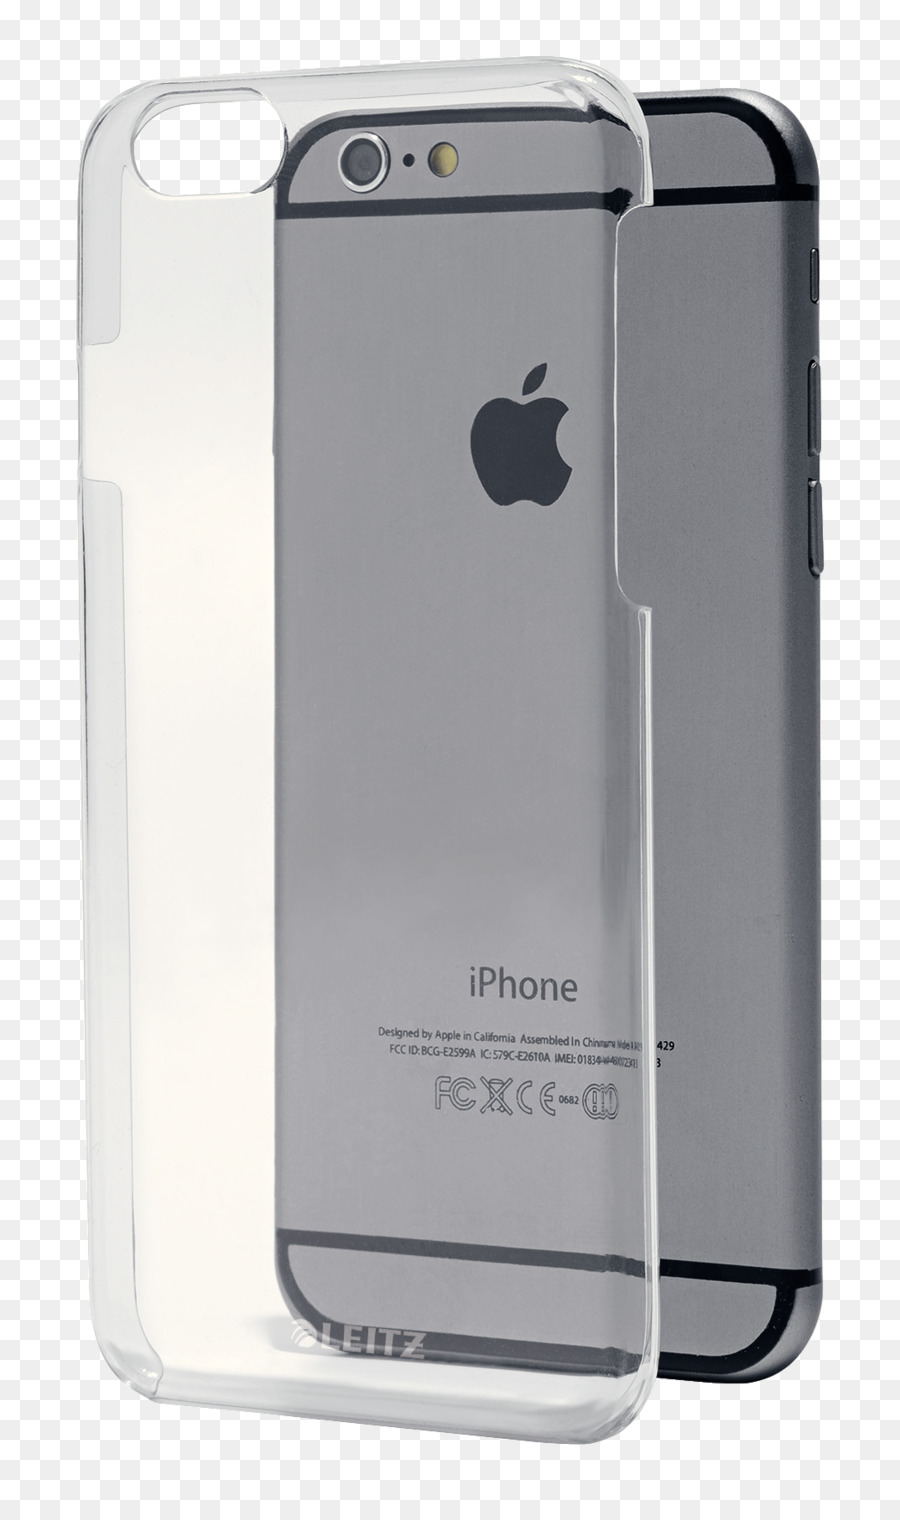 iPhone 6 Plus iPad 1 iPhone 6S iPad Air - Mela